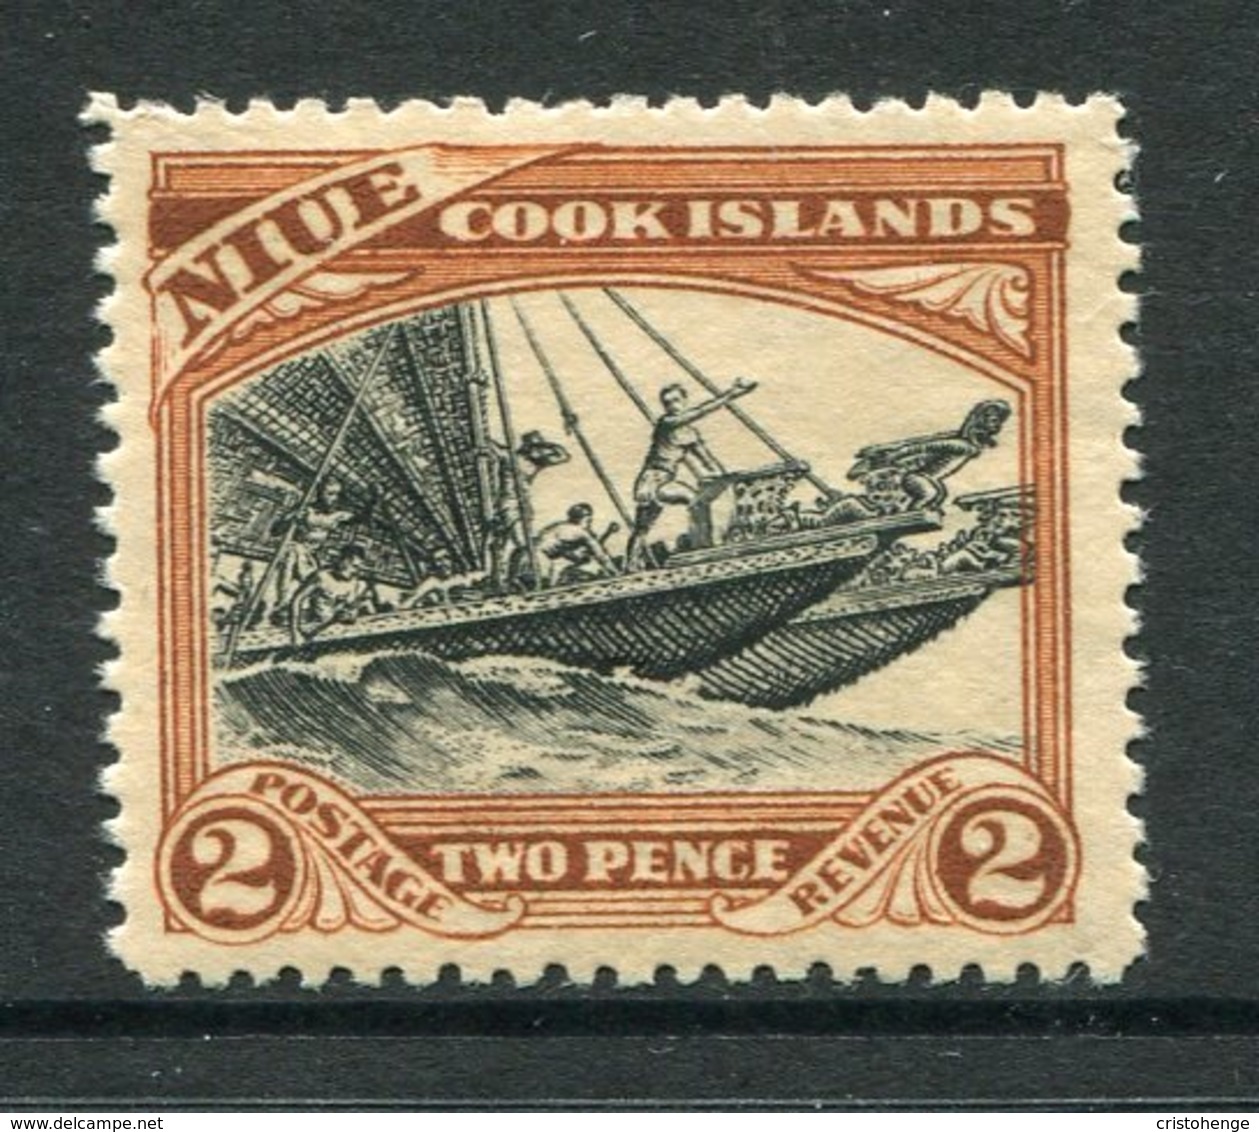 Niue 1932-36 Pictorials - Wmk. NZ & Star - 2d Double Maori Canoe HM (SG 64) - Niue